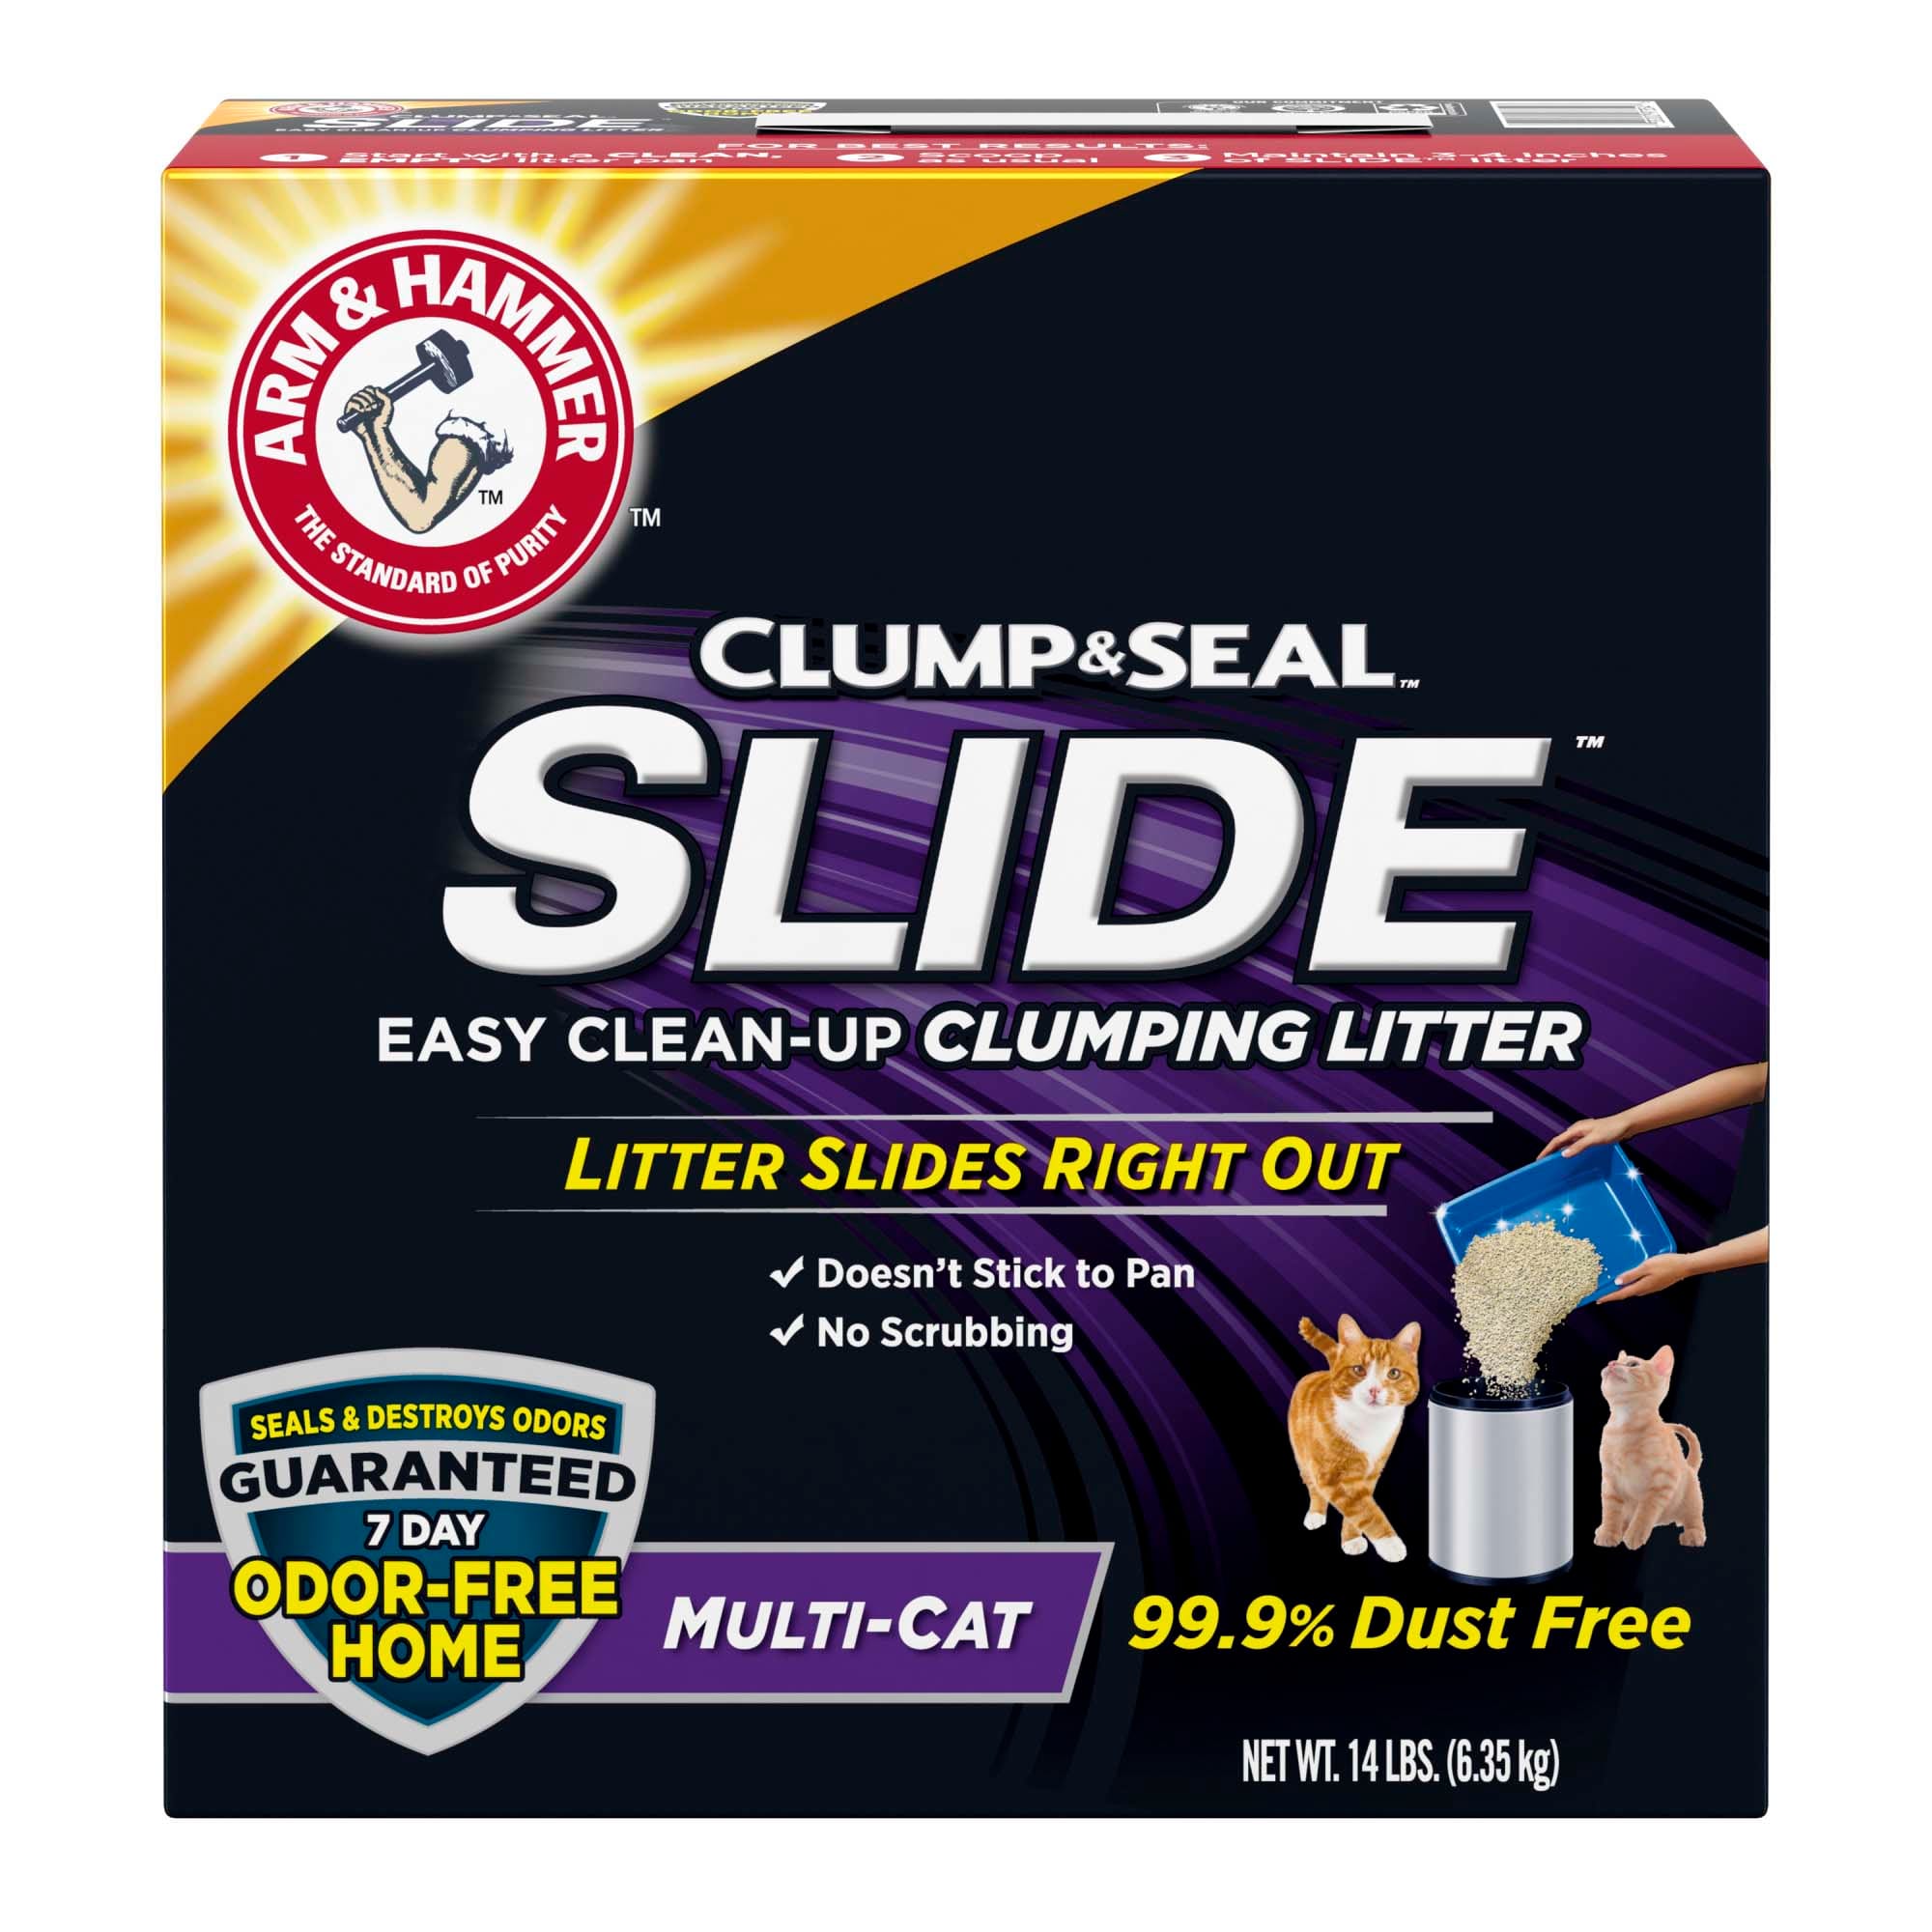 arm-hammer-clump-seal-slide-multi-cat-clumping-litter-14-lbs-petco